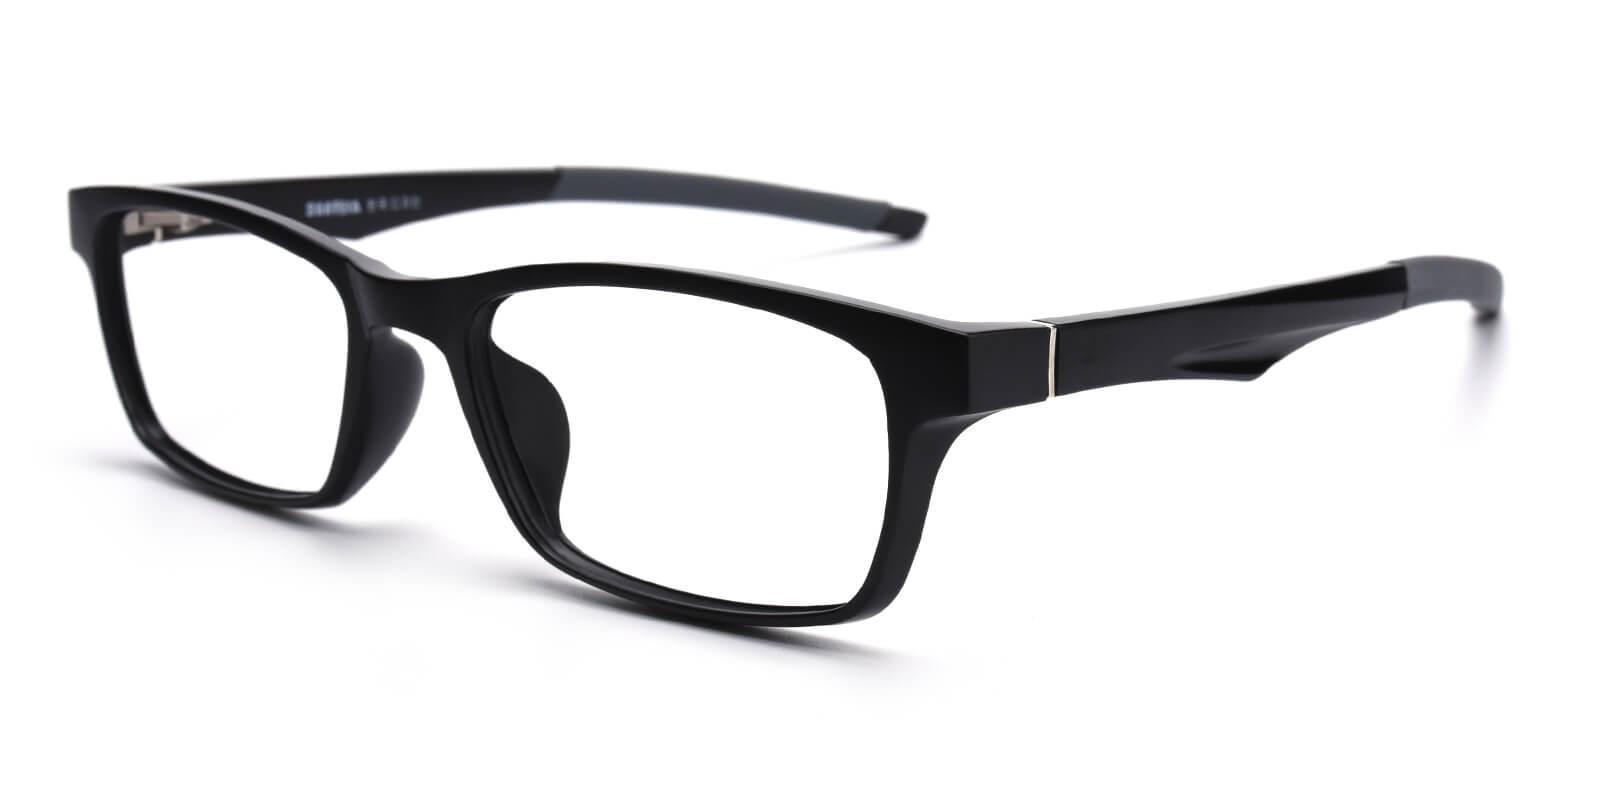 Claudia Black TR SportsGlasses , UniversalBridgeFit Frames from ABBE Glasses